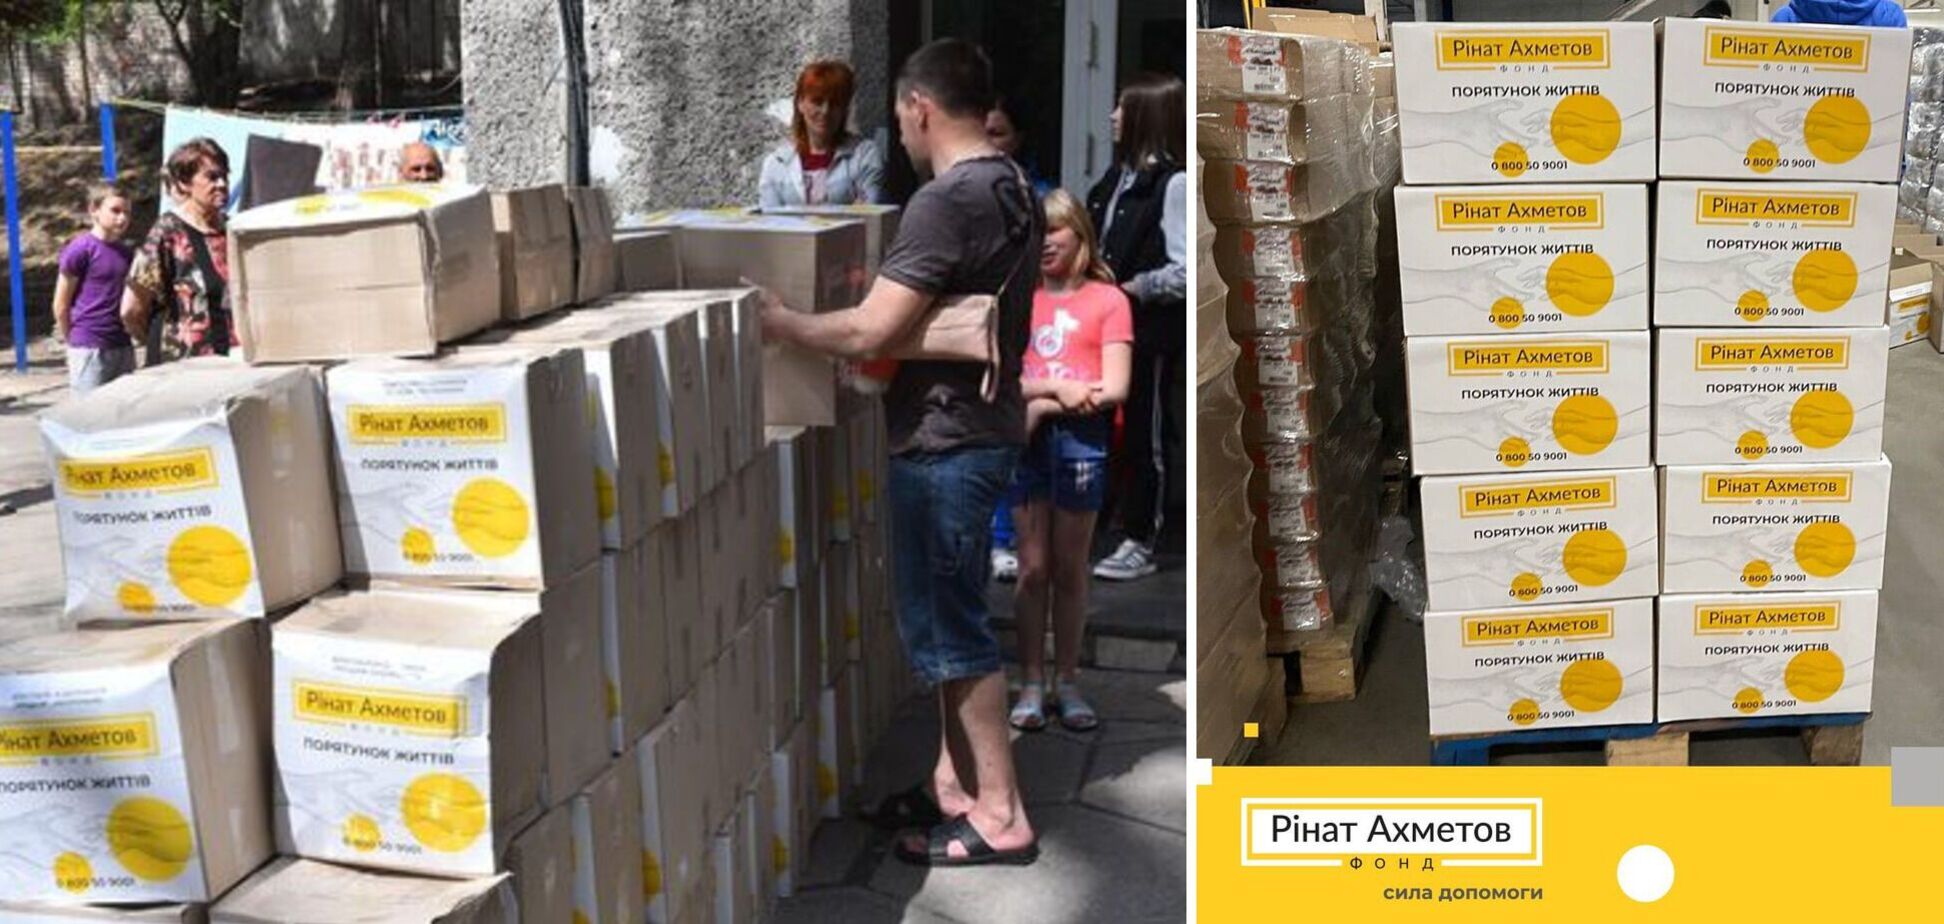 Допомога Фонду Ріната Ахметова приїхала у Київ: де отримати